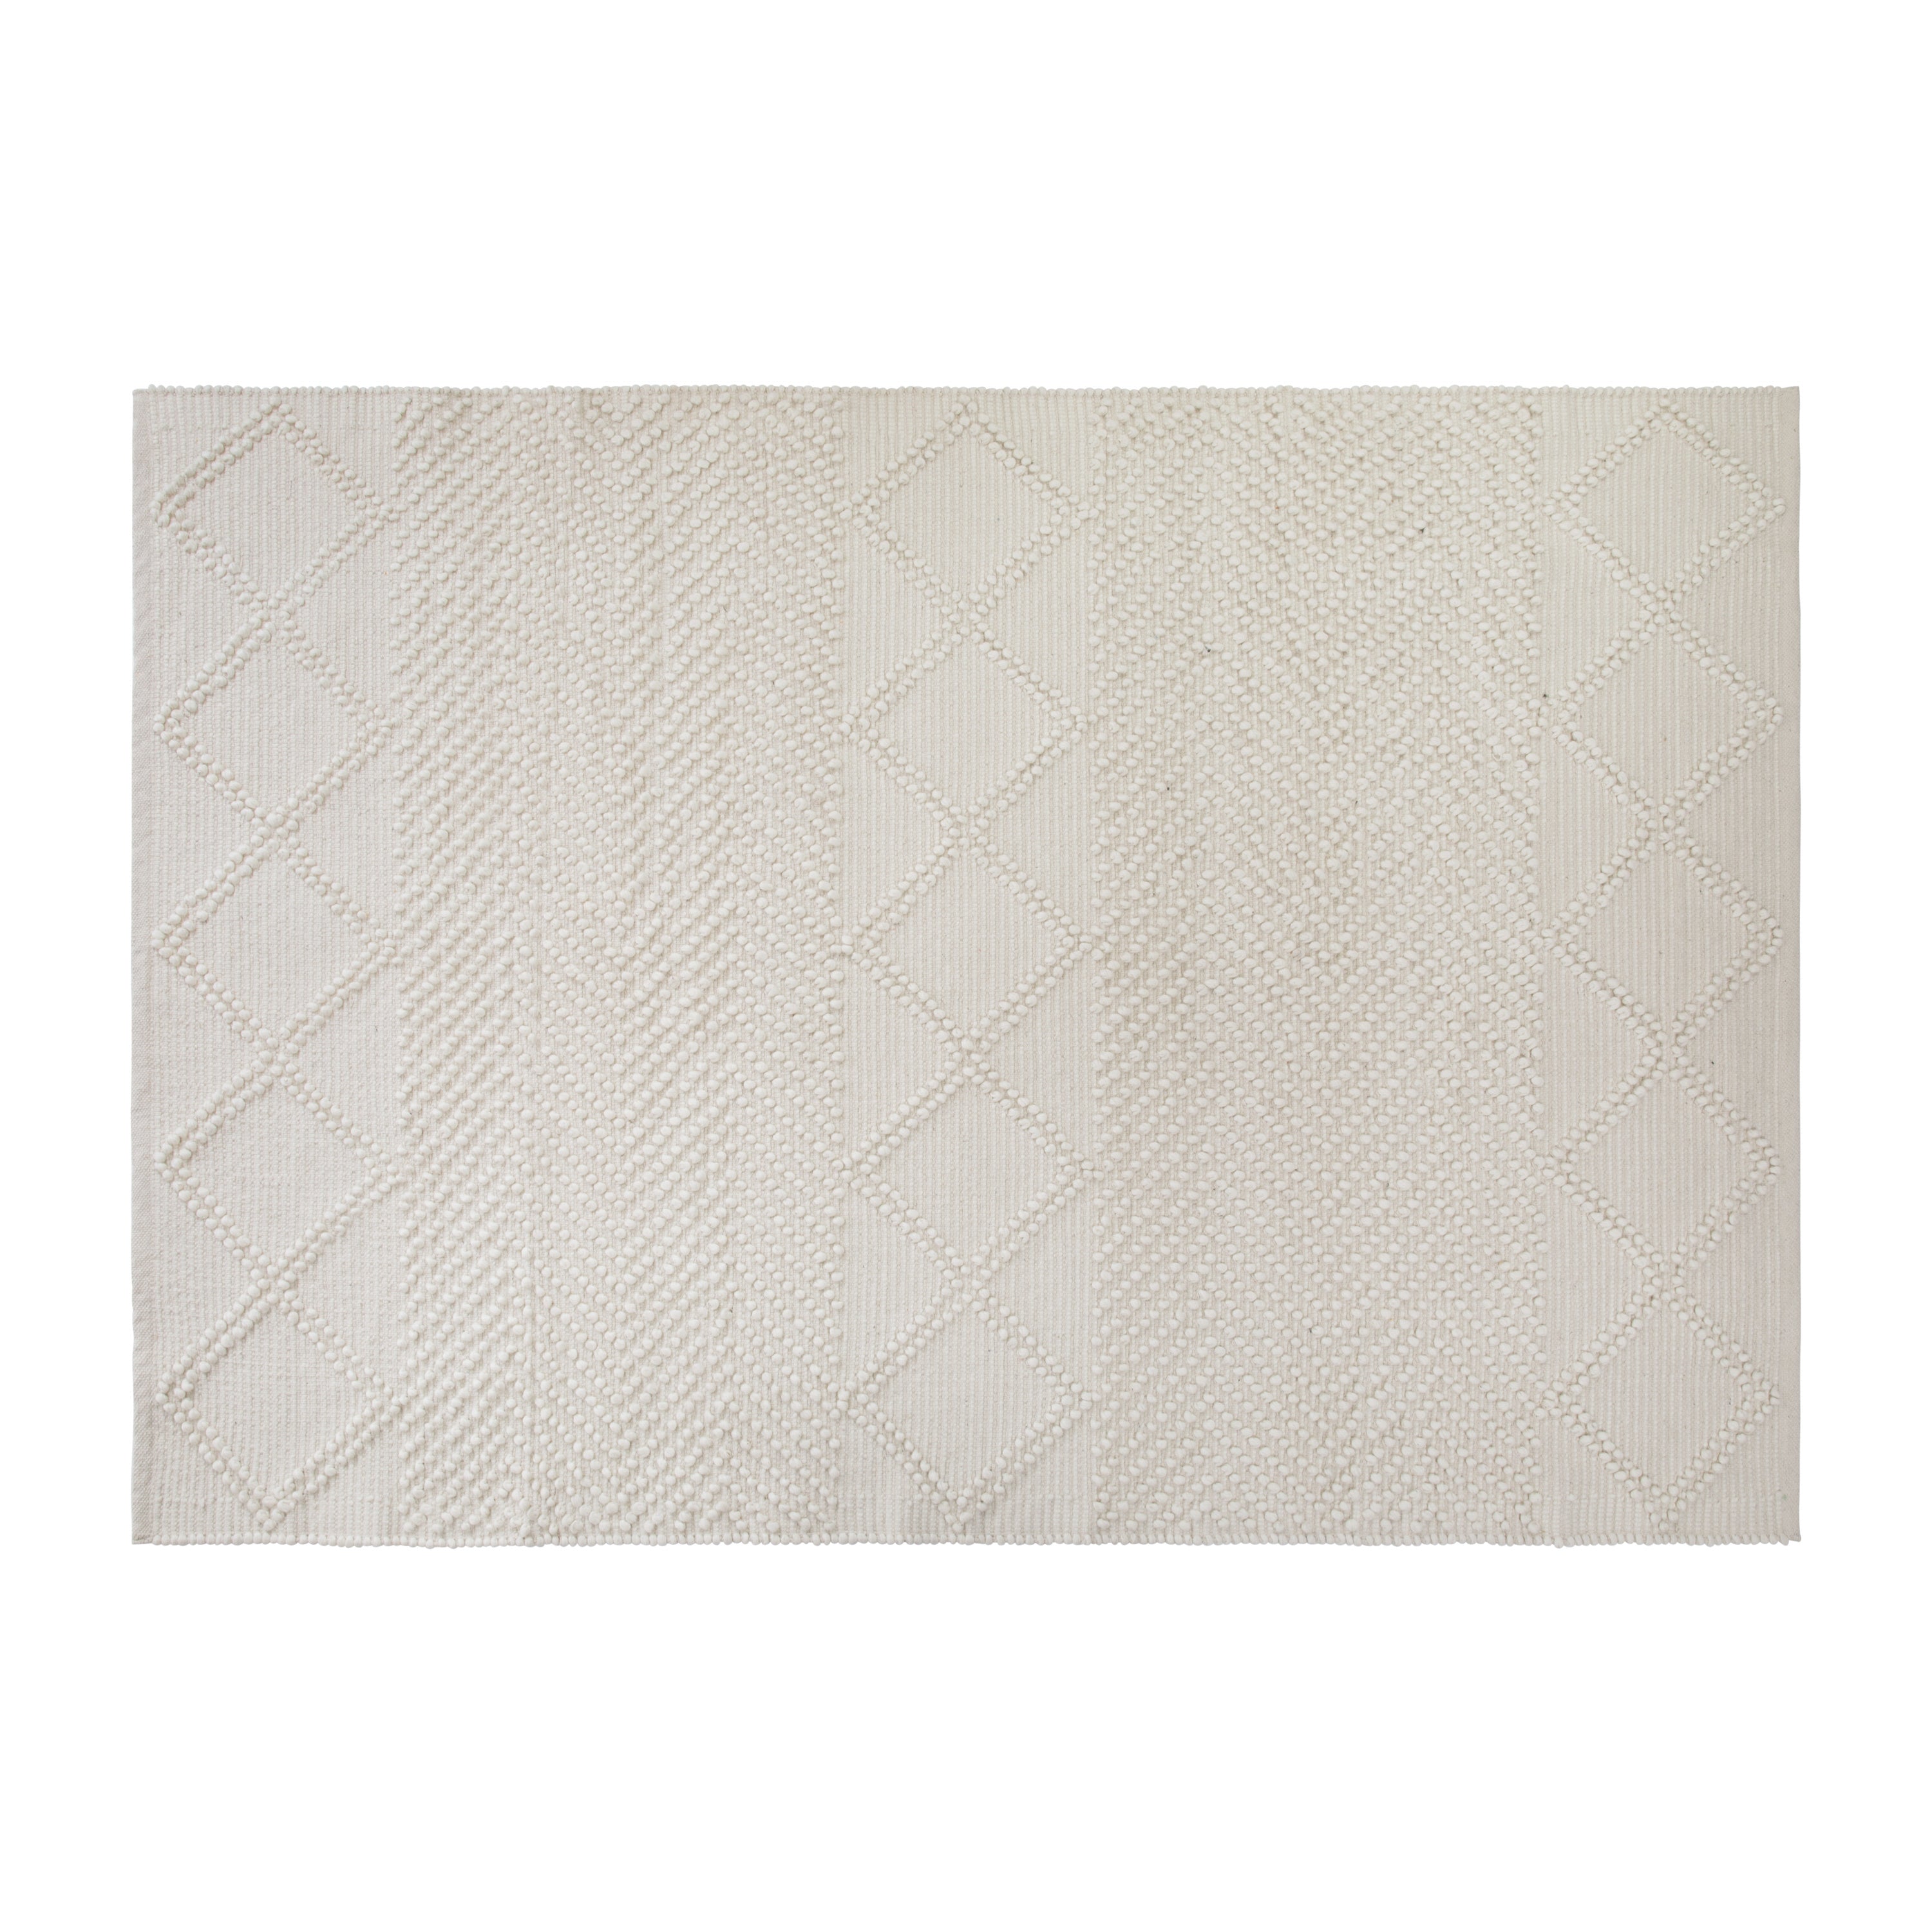 Geometric Design Handwoven Area Rug - Wool/Polyester/Cotton Blend-Area Rug-Flash Furniture-Wall2Wall Furnishings